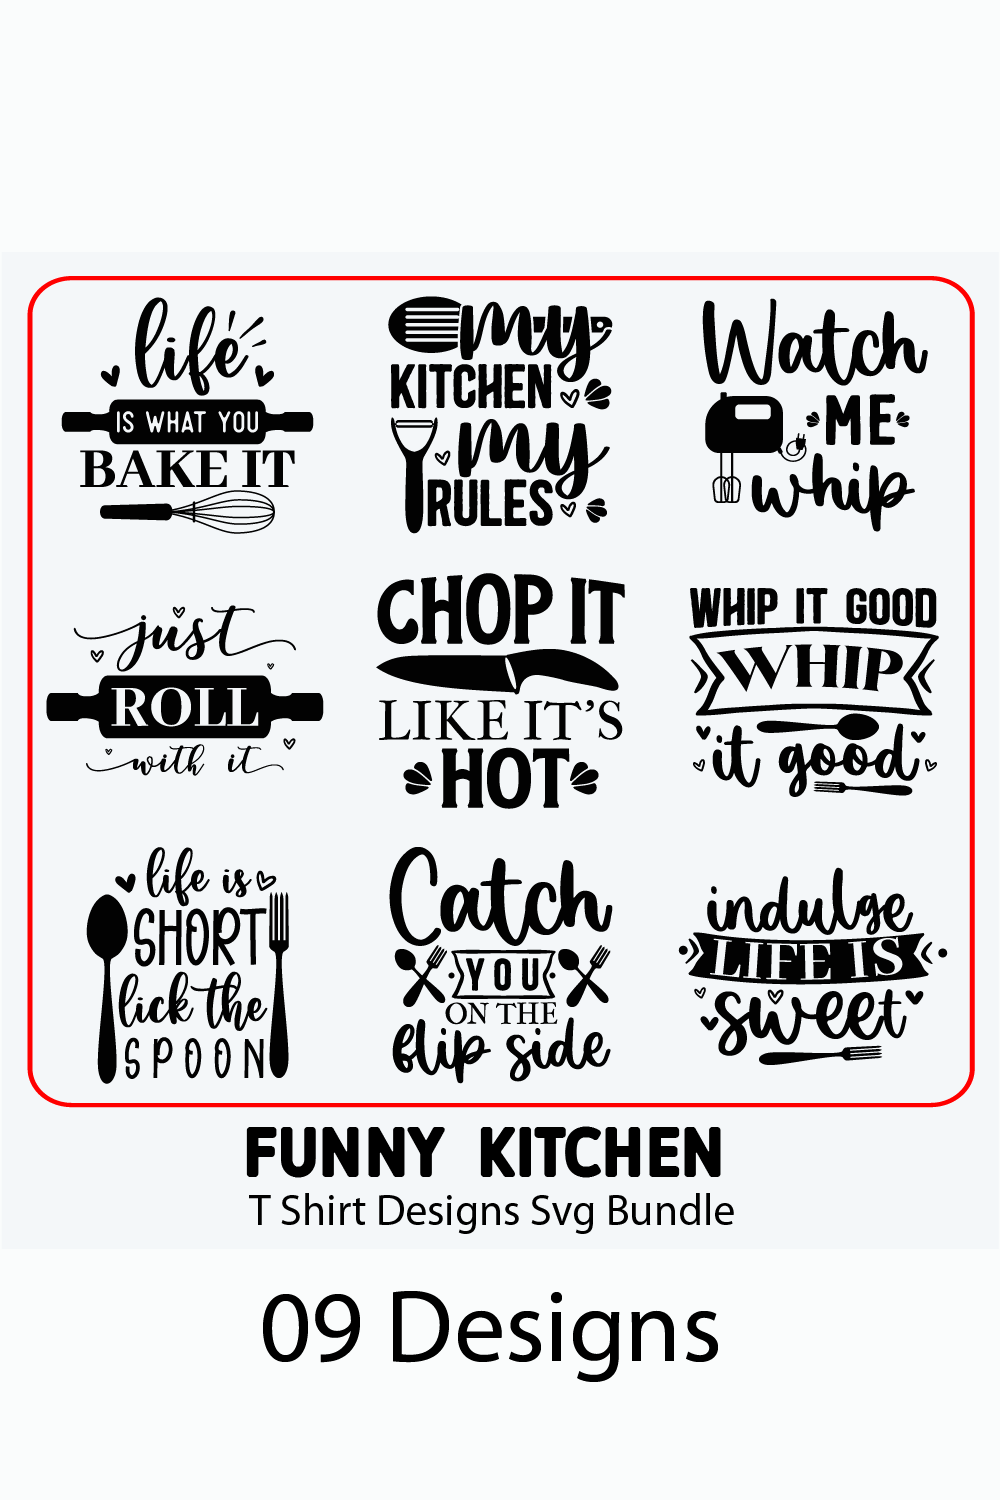 Funny Kitchen T Shirt Designs SVG Designs pinterest preview image.